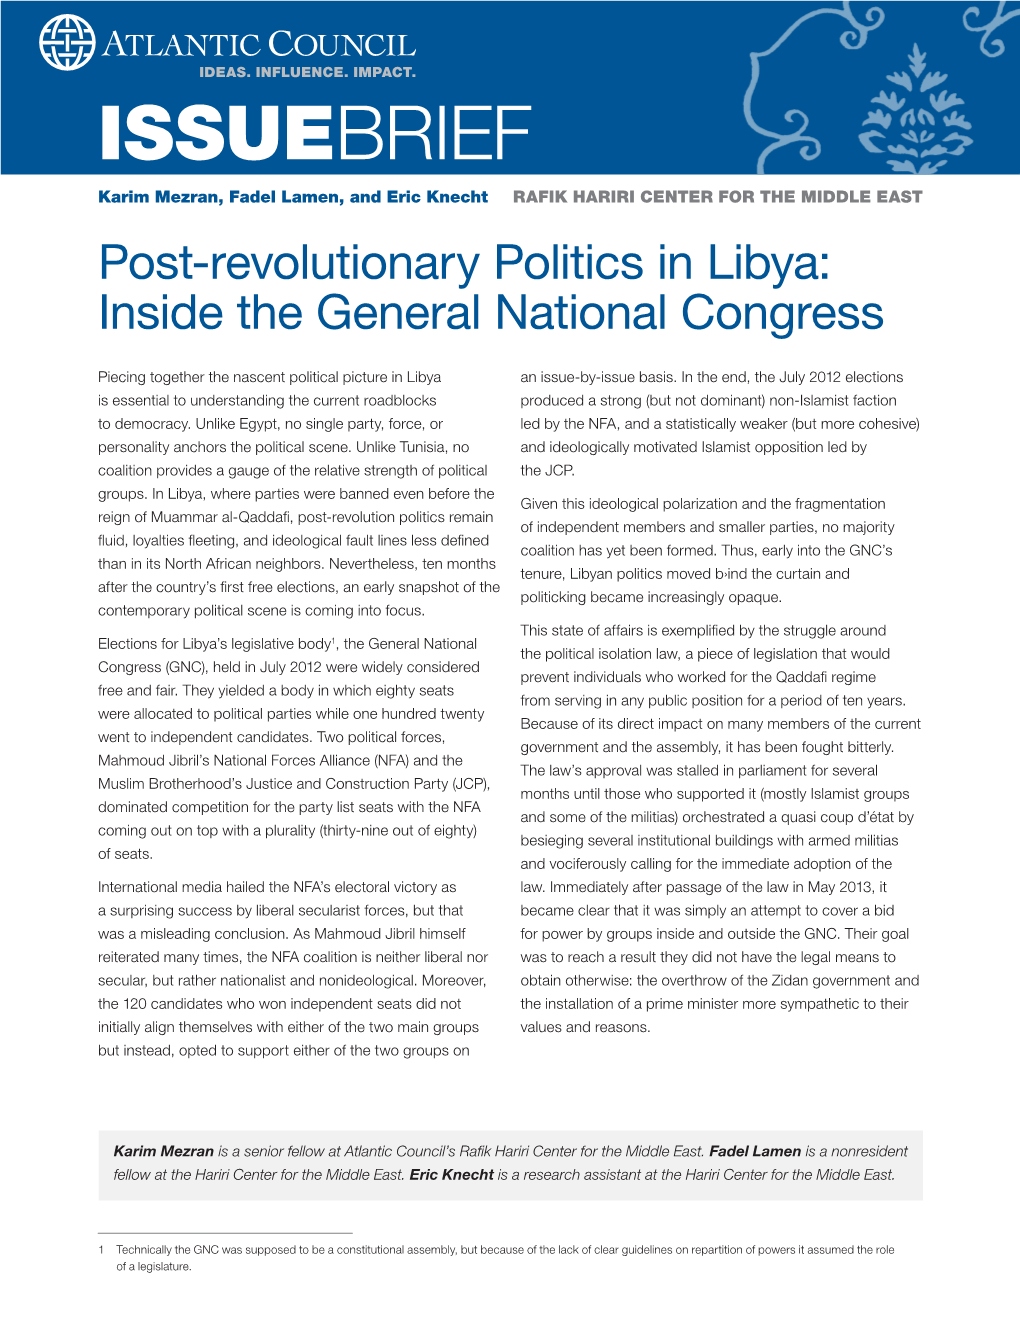 Post-Revolutionary Politics in Libya: Inside the General National Congress